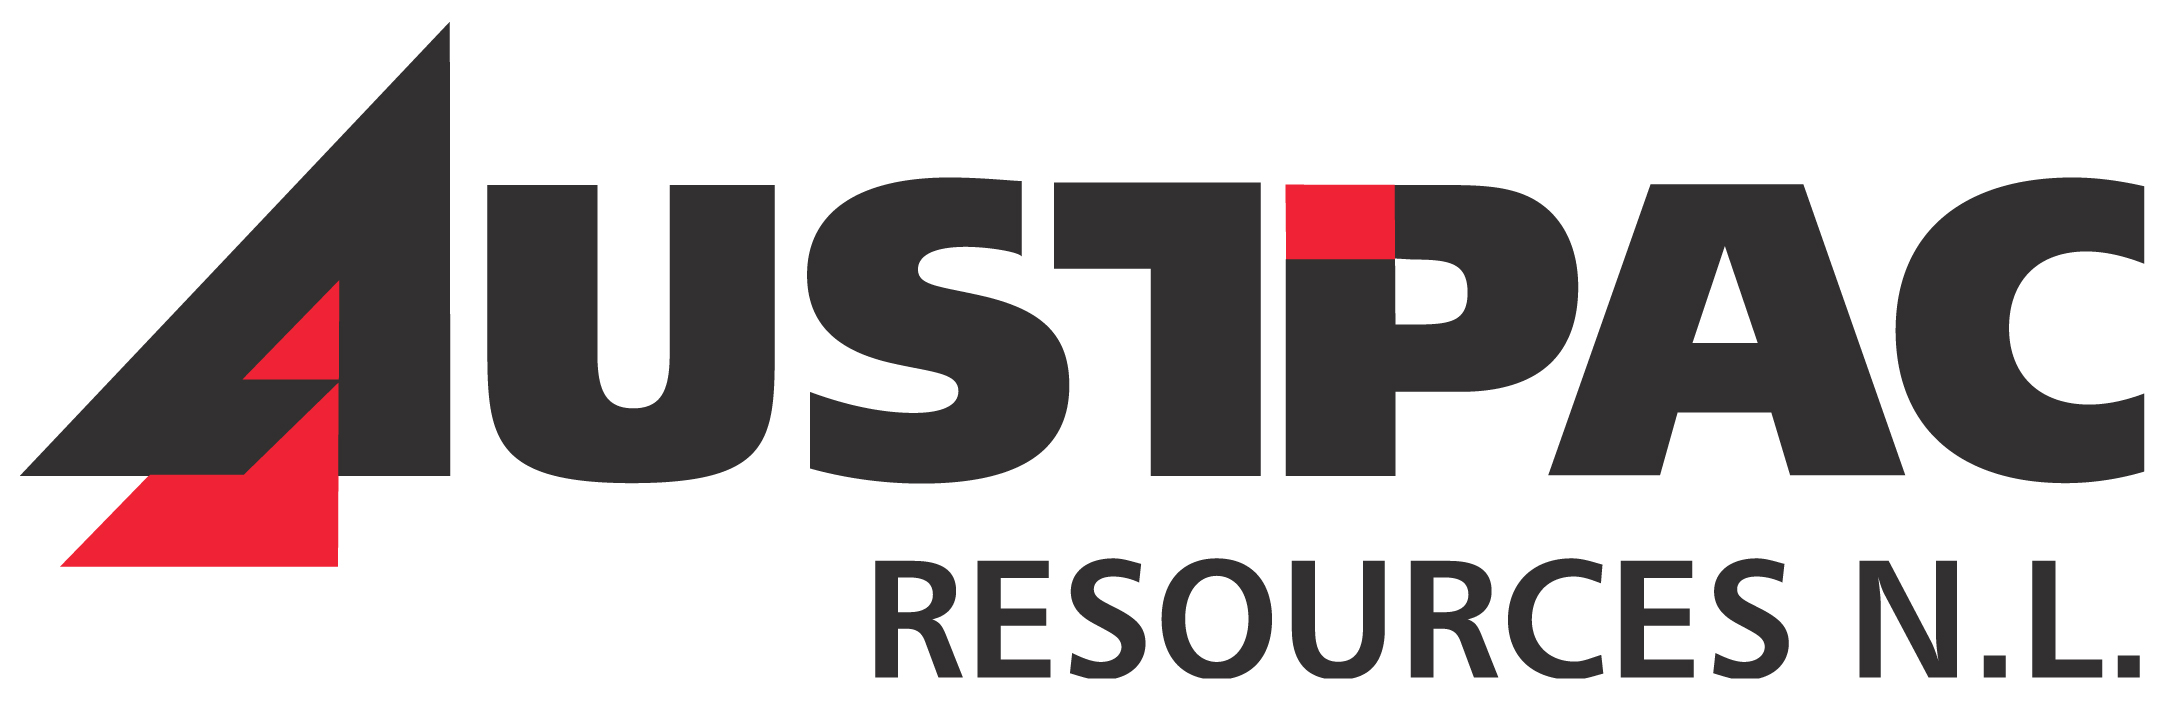 Austpac Resources